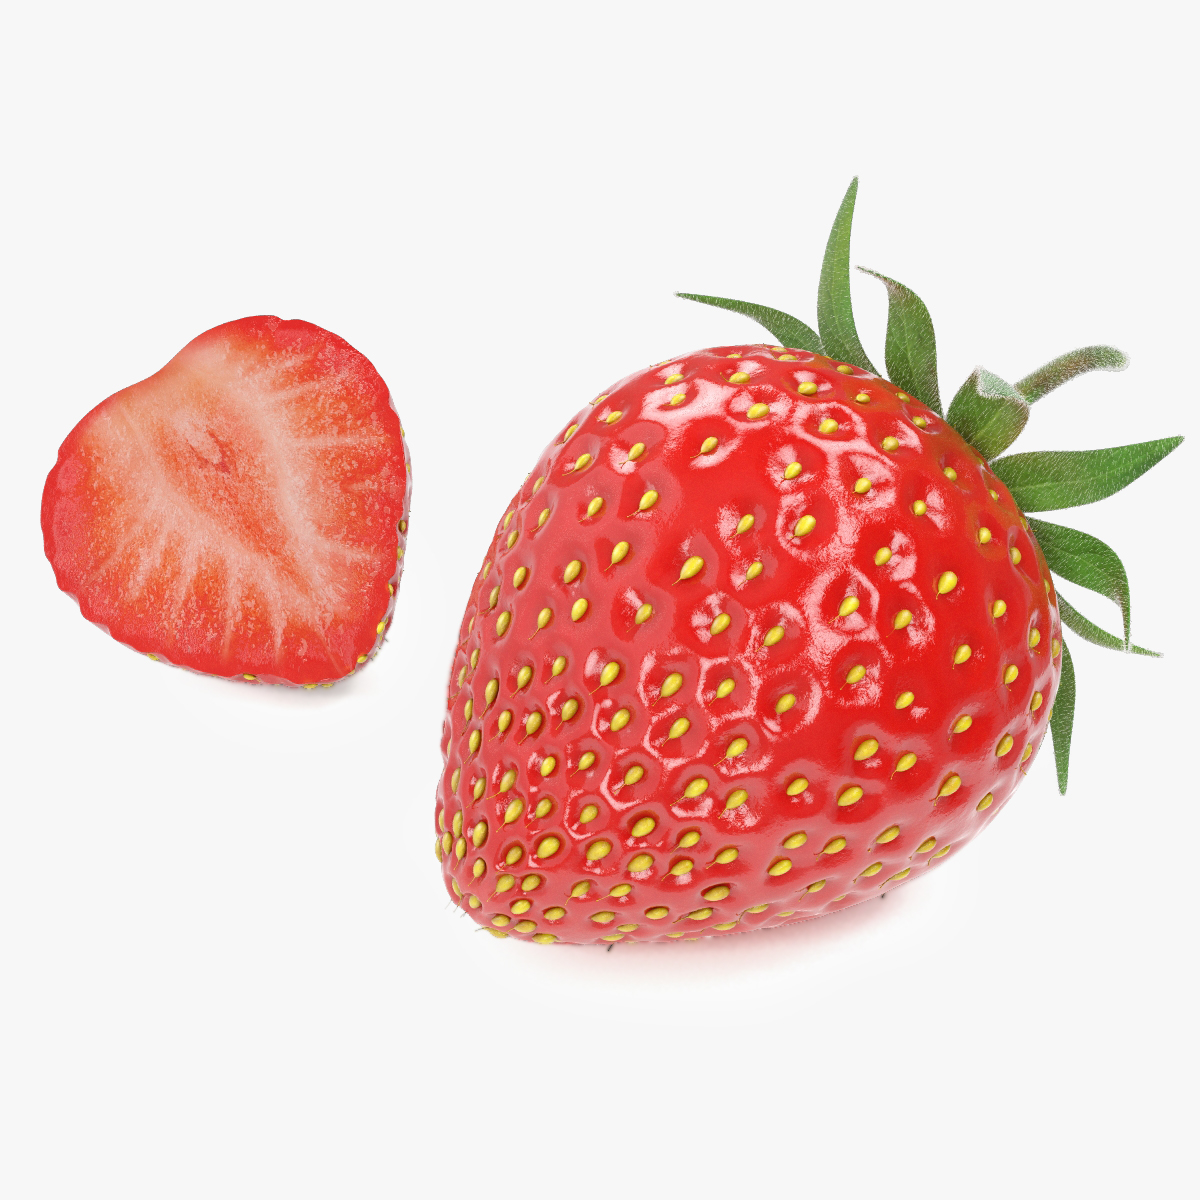 strawberries 3d max https://static.turbosquid.com/Preview/2015/10/30__10_10_16/st_15.jpg08b172b7-cac6-4e8a-9bf3-493ba17e2a9aOriginal.jpg